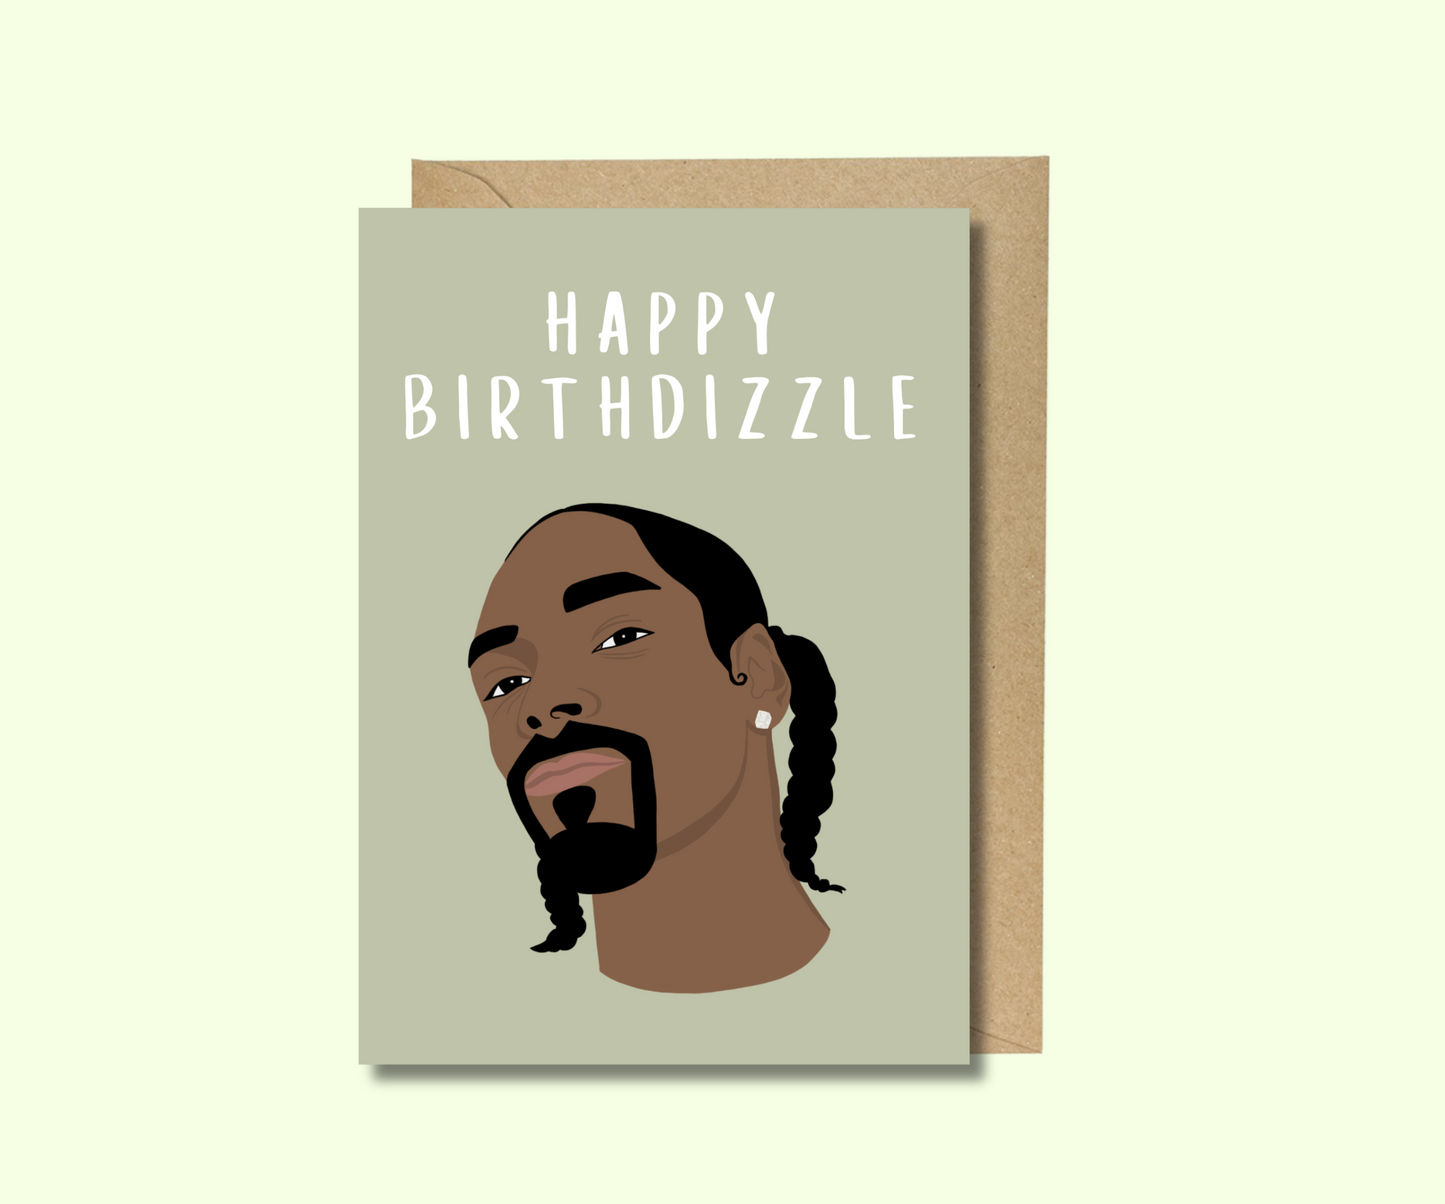 Snoop Dogg Geburtstagskarte - Happy Birthdizzle